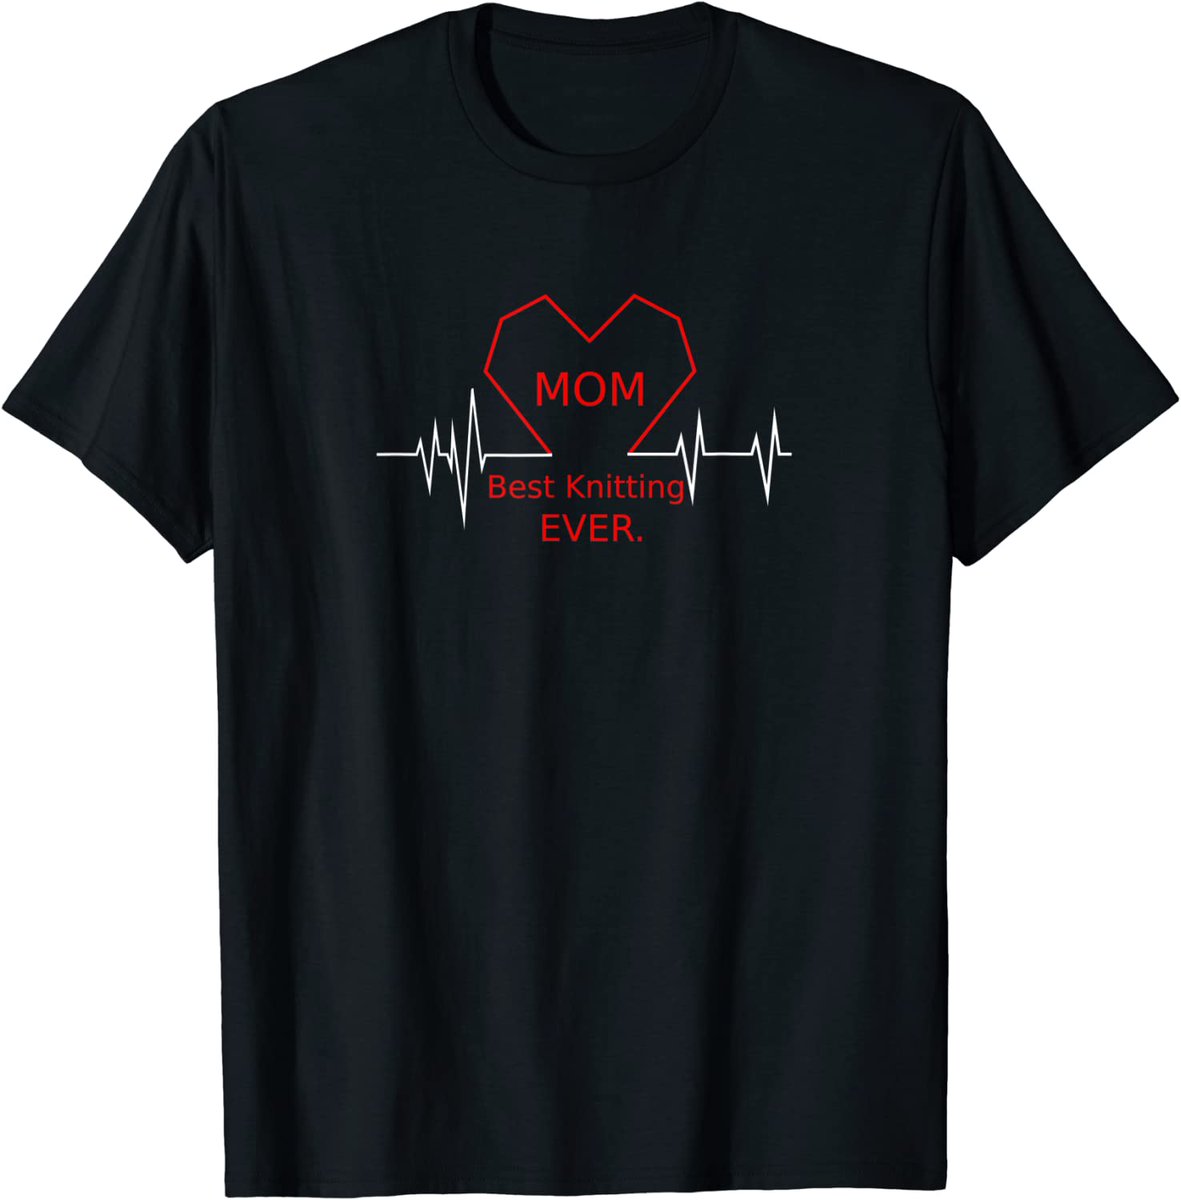 #momtshirt #dadtshirt #etsy #giftsforher #momshirt #customizedshirts #mom #tshirts #momlife #momtshirts #momtee #custommade #momtees #mothersday #giftformom #tshirtdesign #fashion #giftsforhim #shopsmall #tshirt #familytshirts #mothersdaygift #momtobe
amazon.com/dp/B0BR8HBDRW